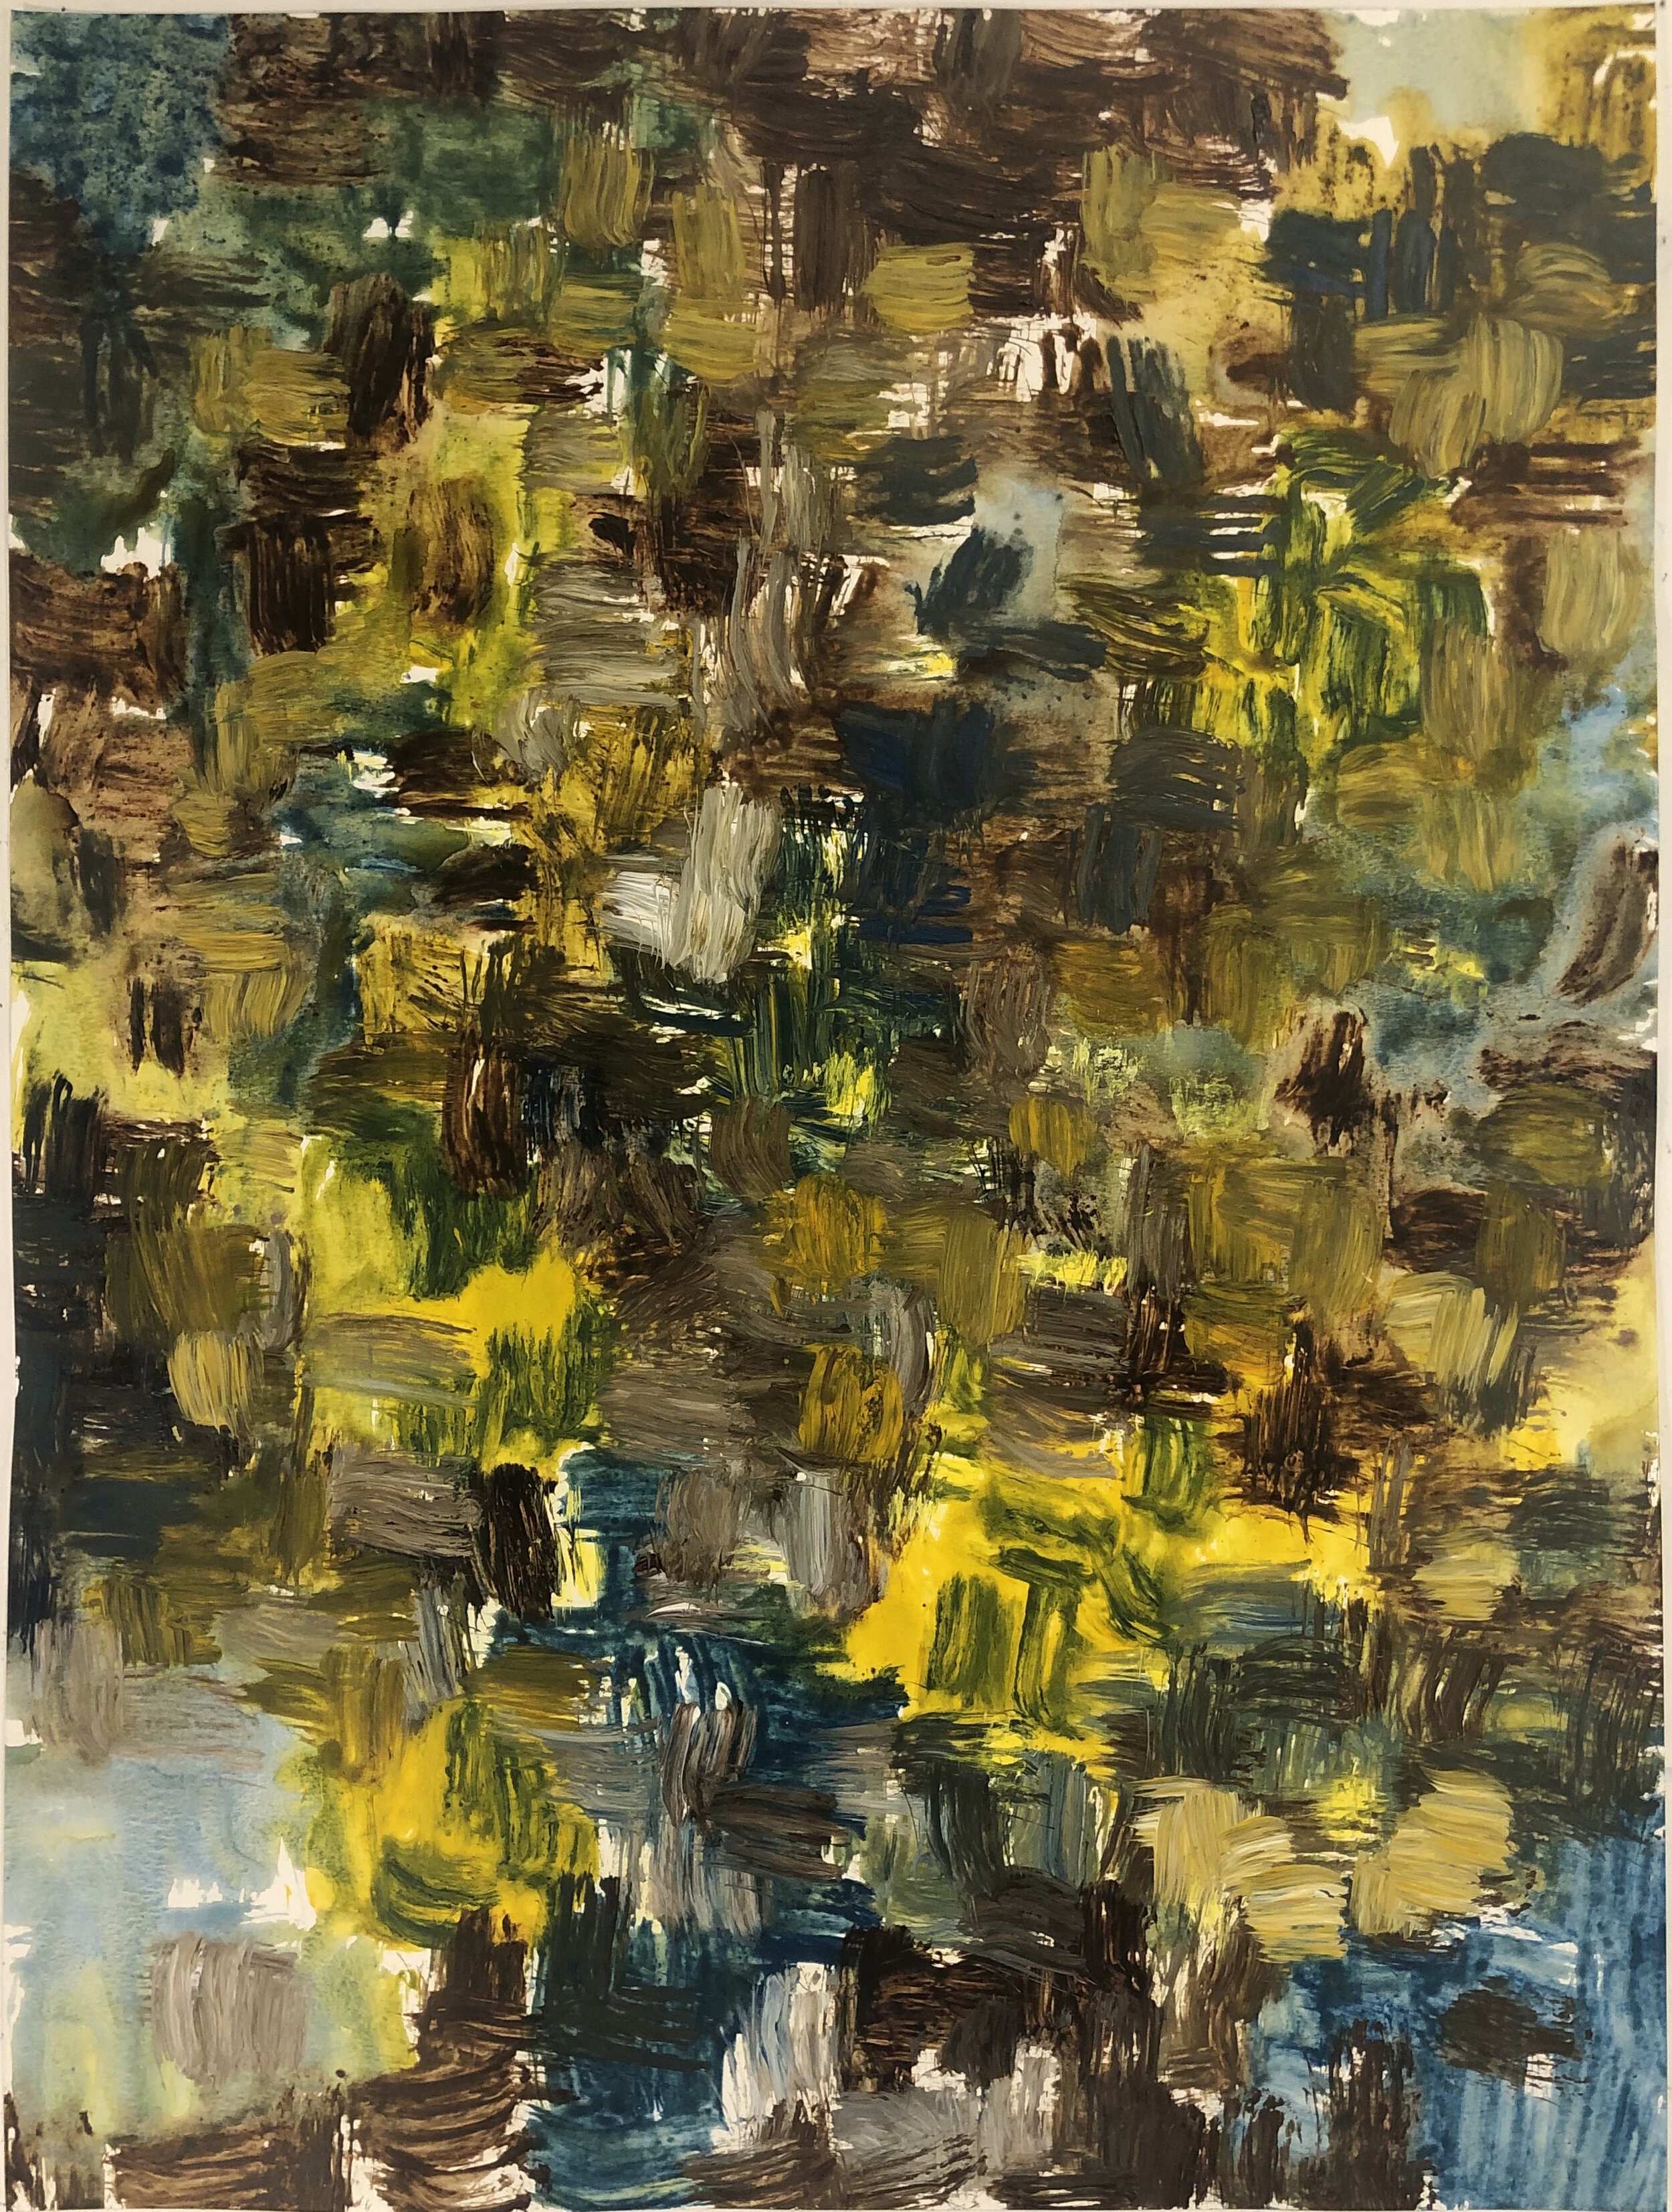 markperryart-abstract-markmaking-allover-painting-24x18-rust-gold-blue-brushstroke-apintings-.jpg